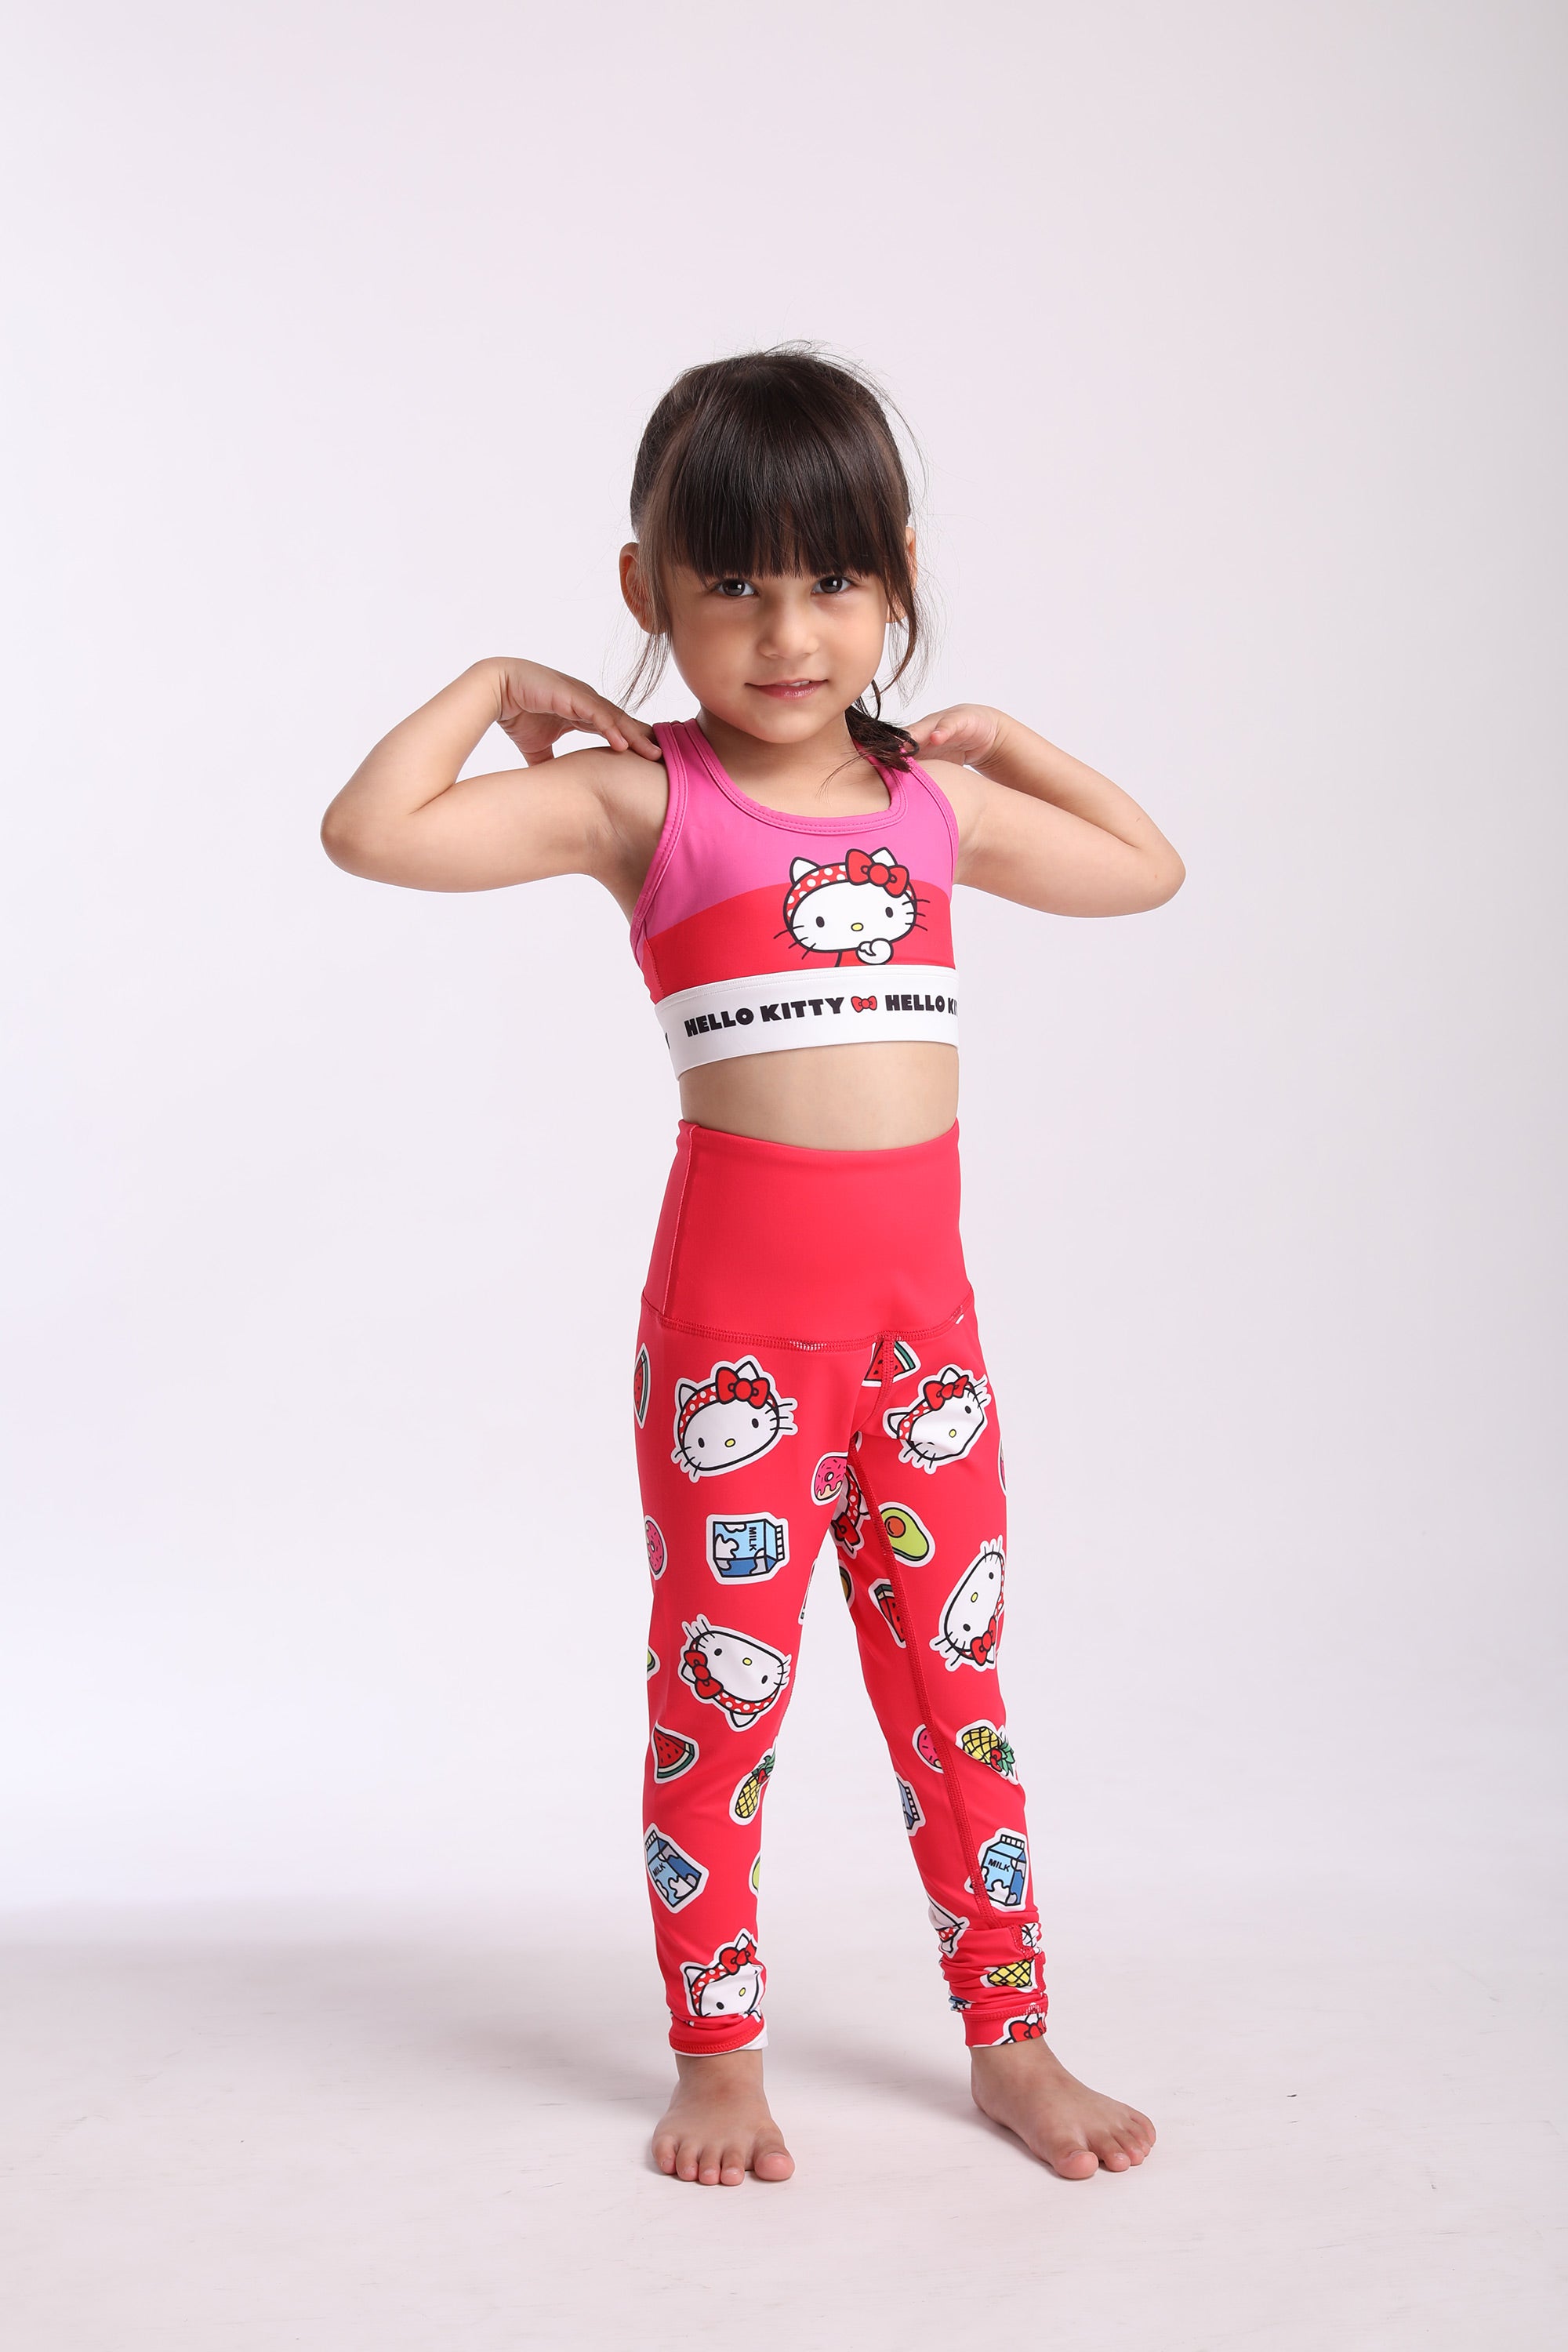 Fashion Children Kids Baby Printing Hello Kitty Tights Leggings